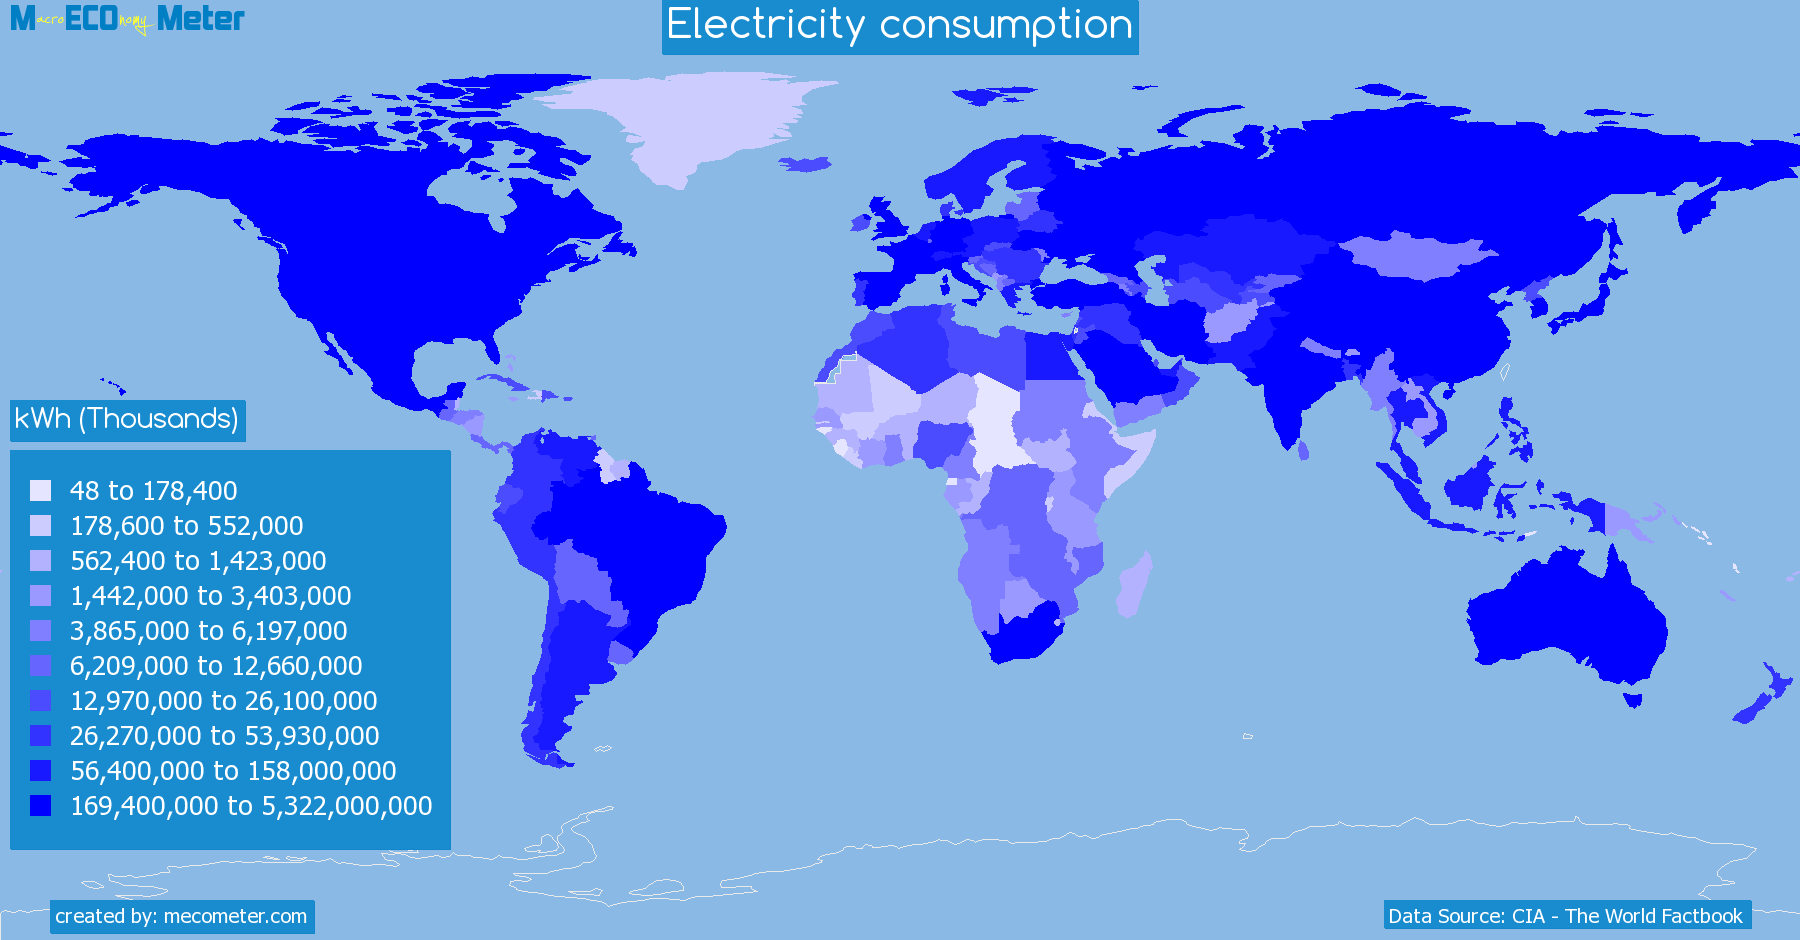 Electricity consumption